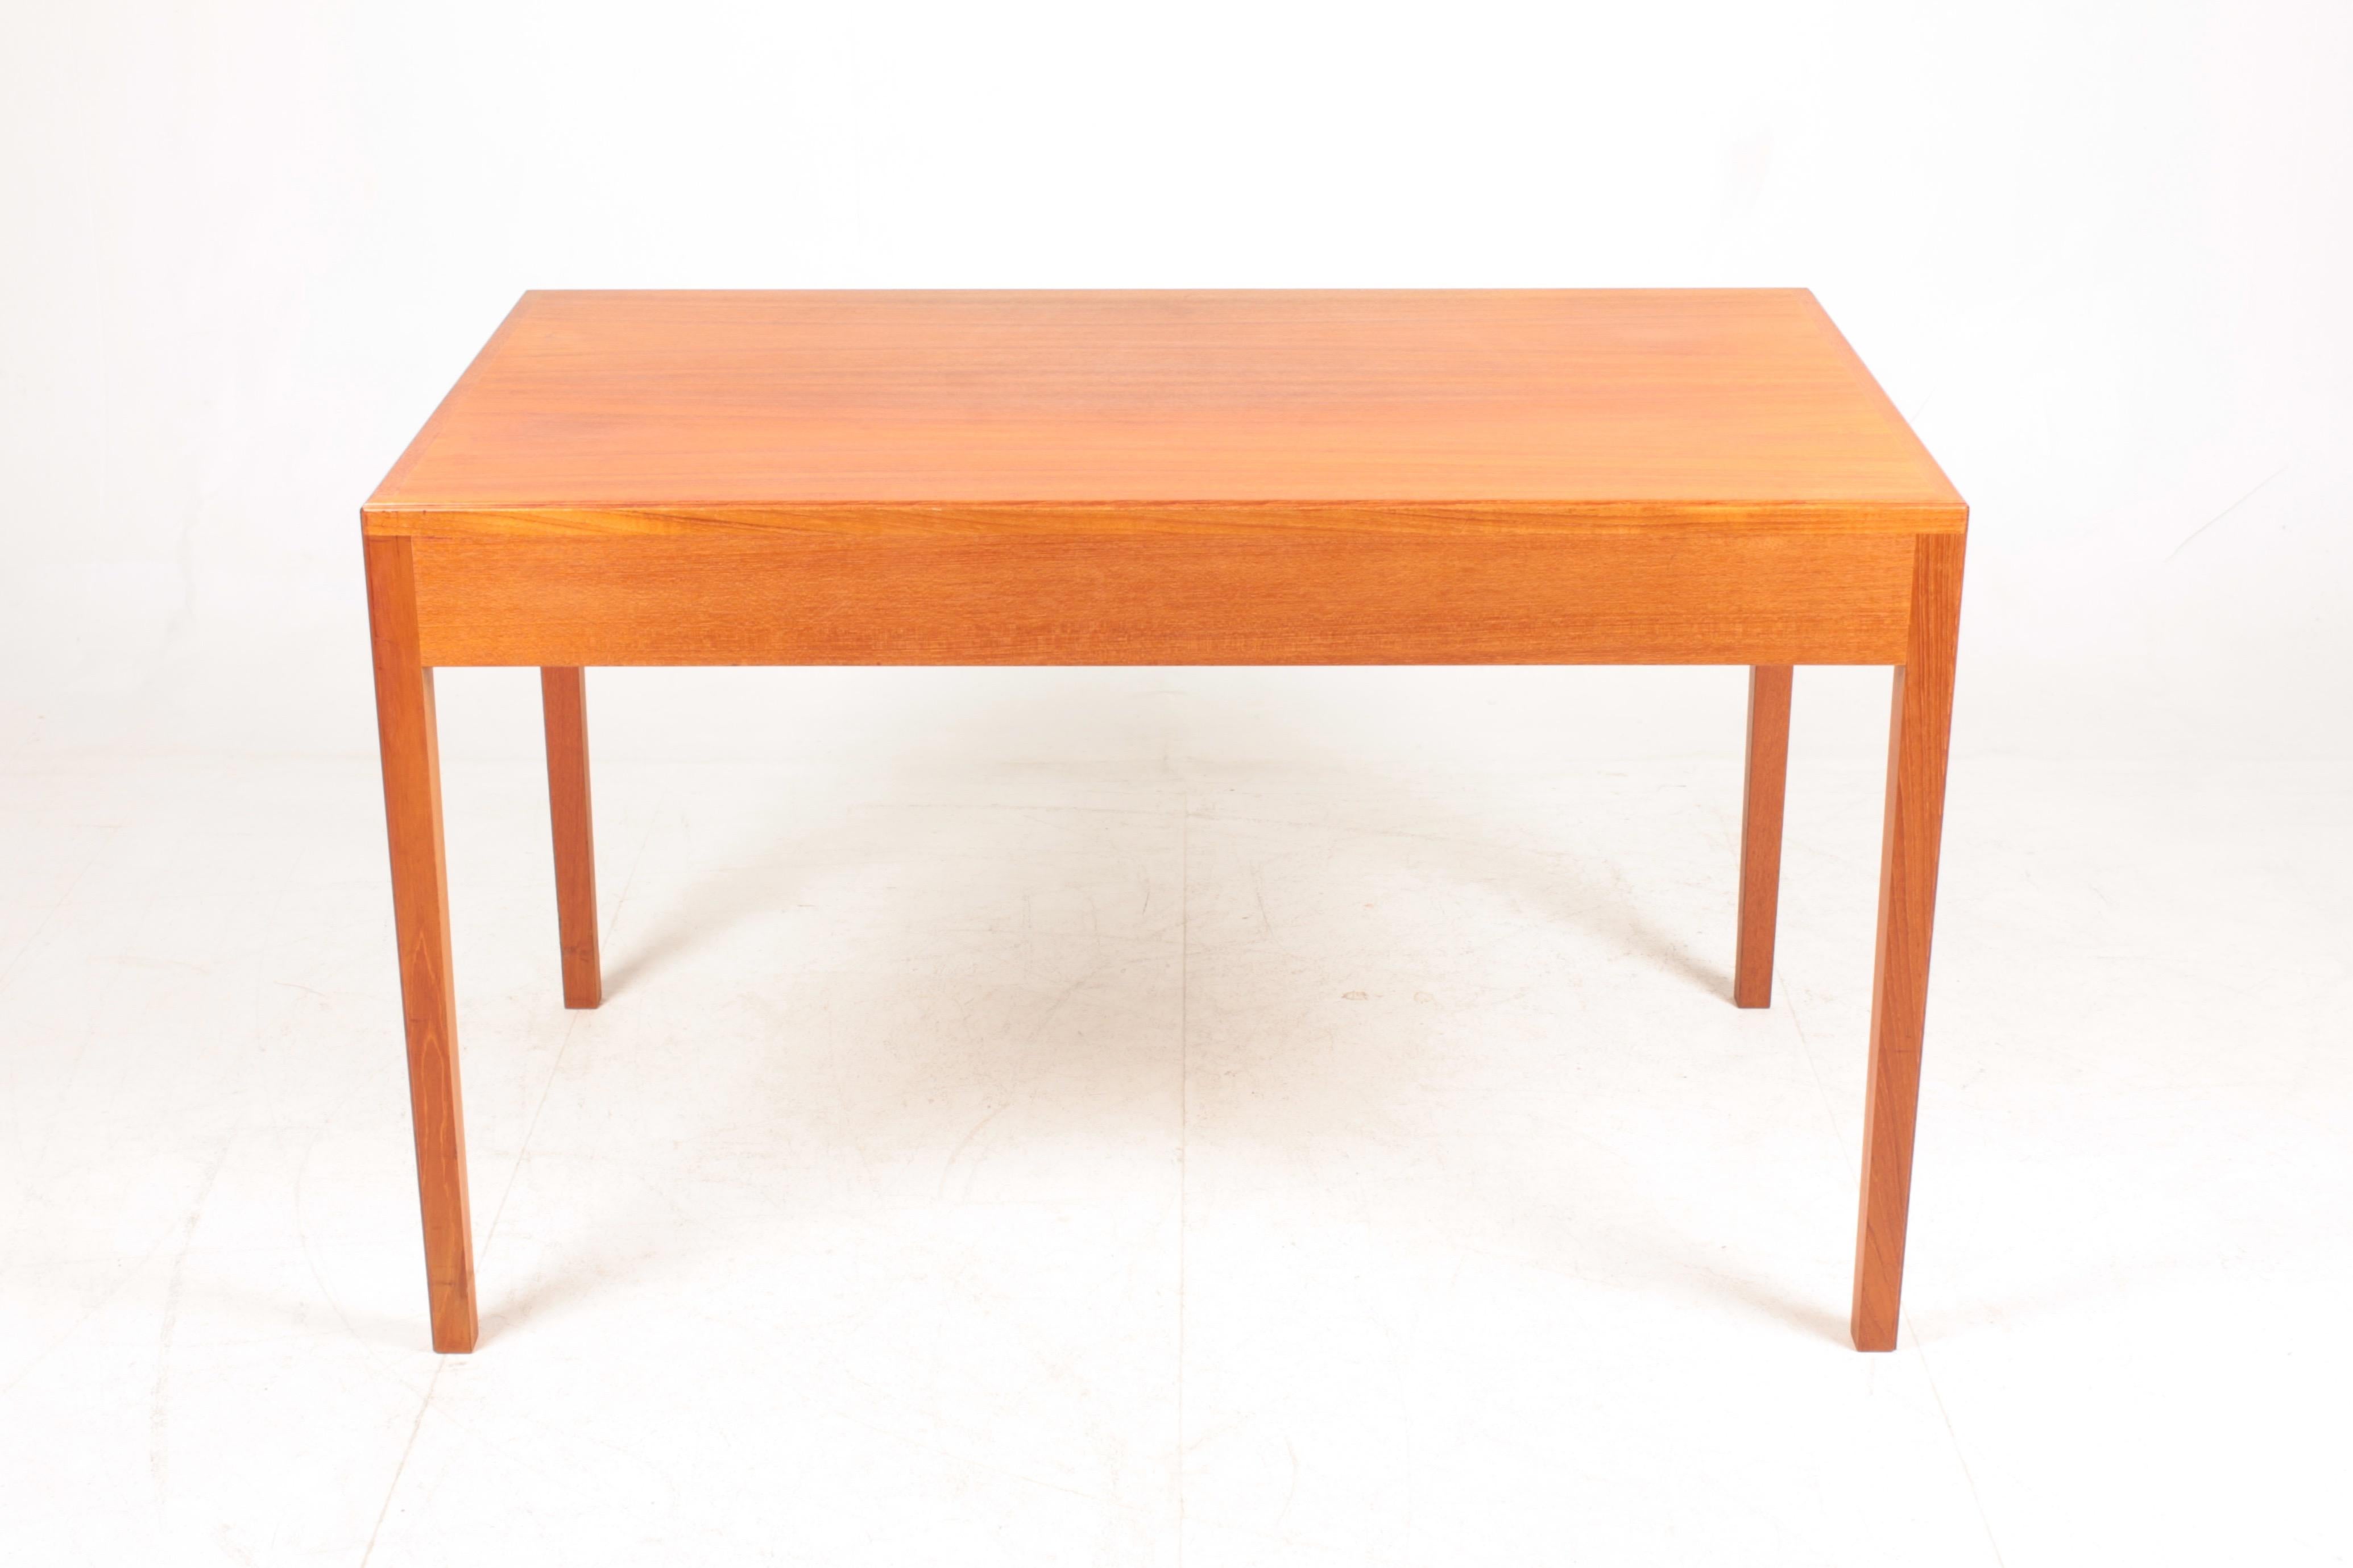 Desk in Teak in Style of Ole Wanscher, Midcentury Danish Design, 1950s For Sale 1